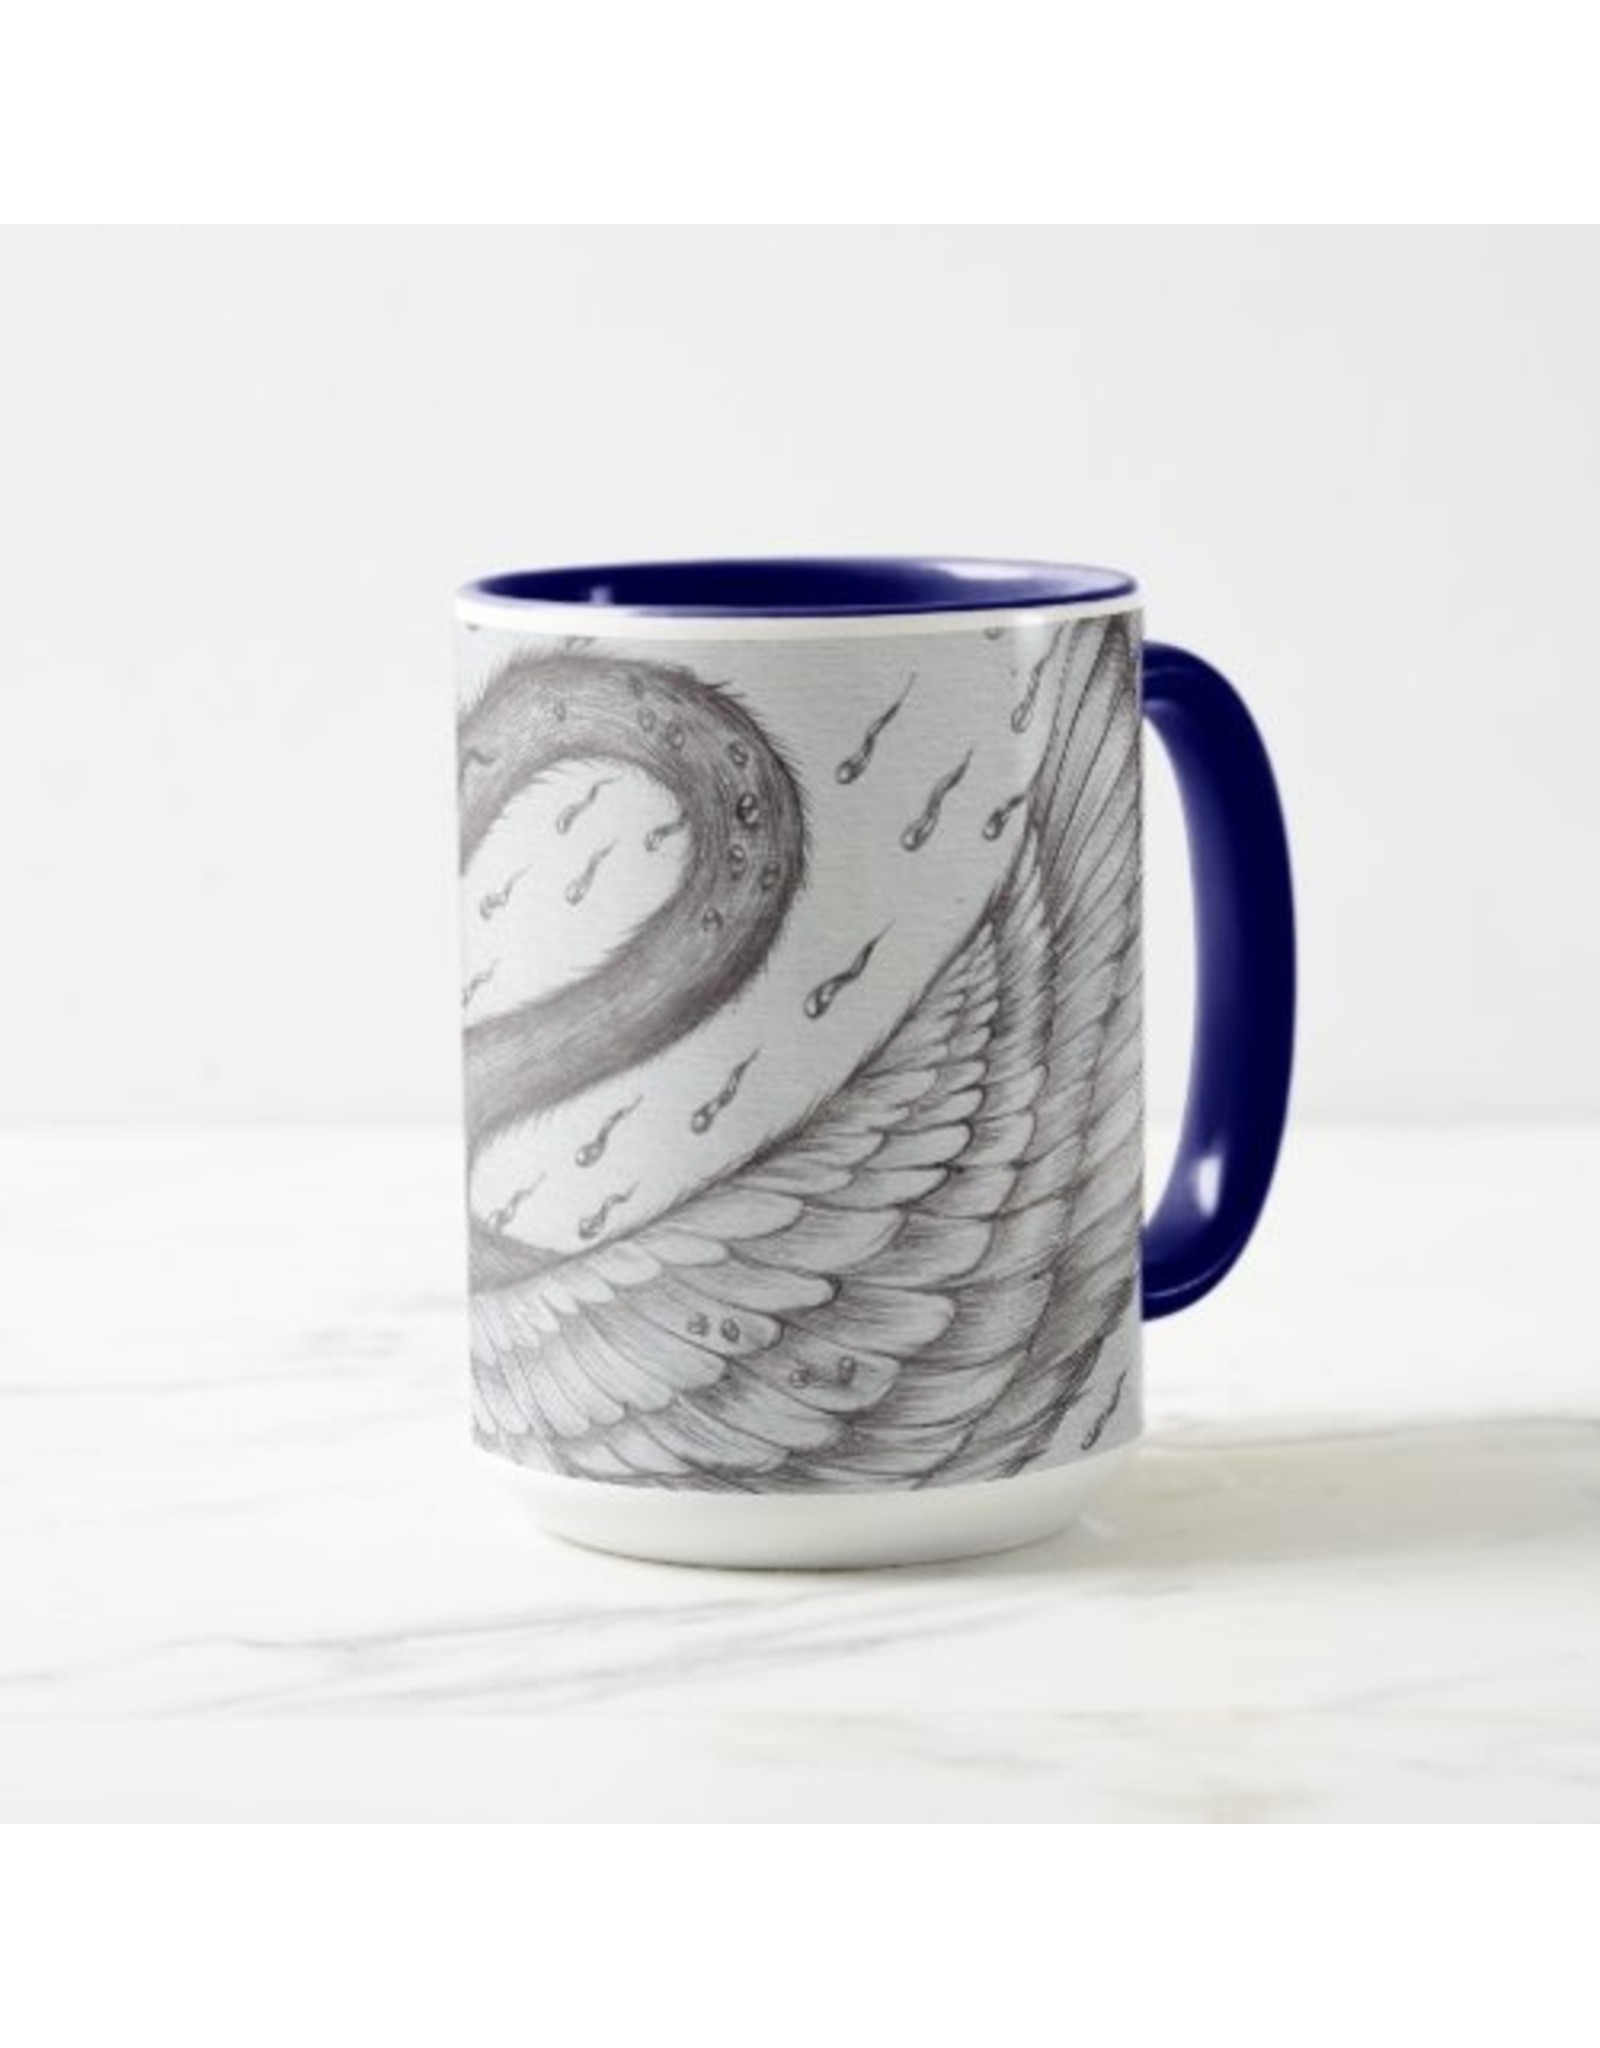 Swan Coffee Cup